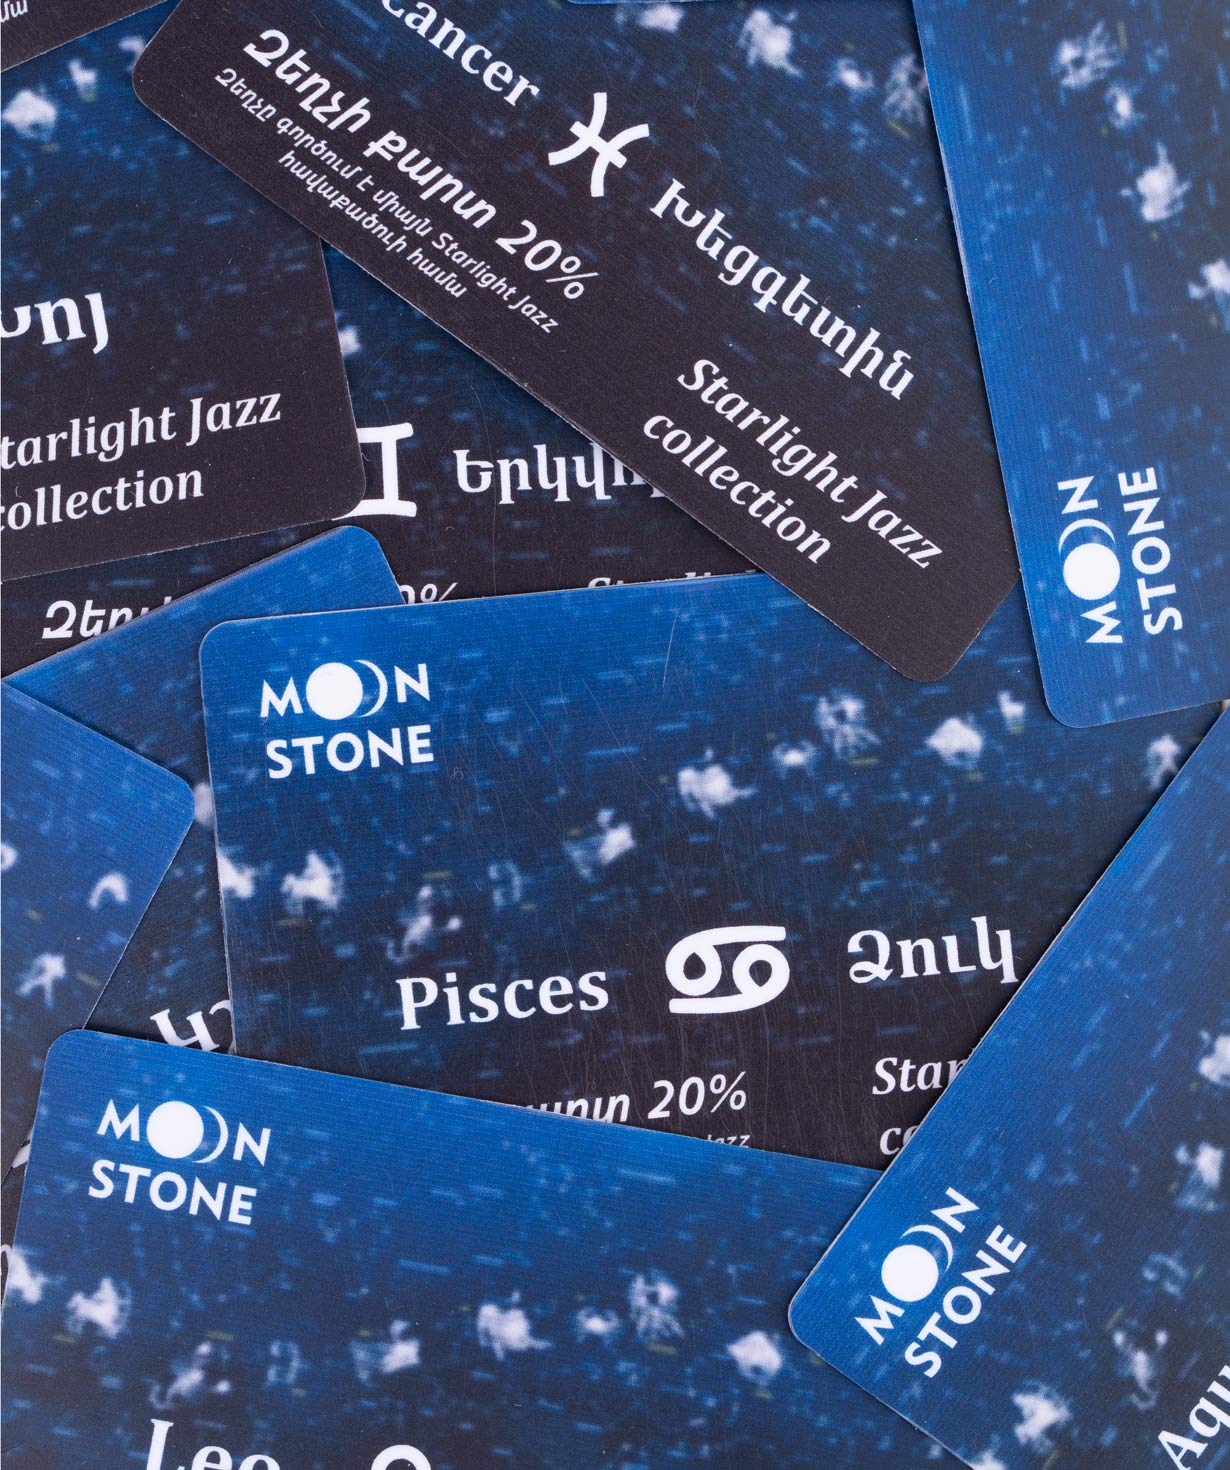 Rhodium Plated Silver Pendant Libra Starlight Jazz Collection